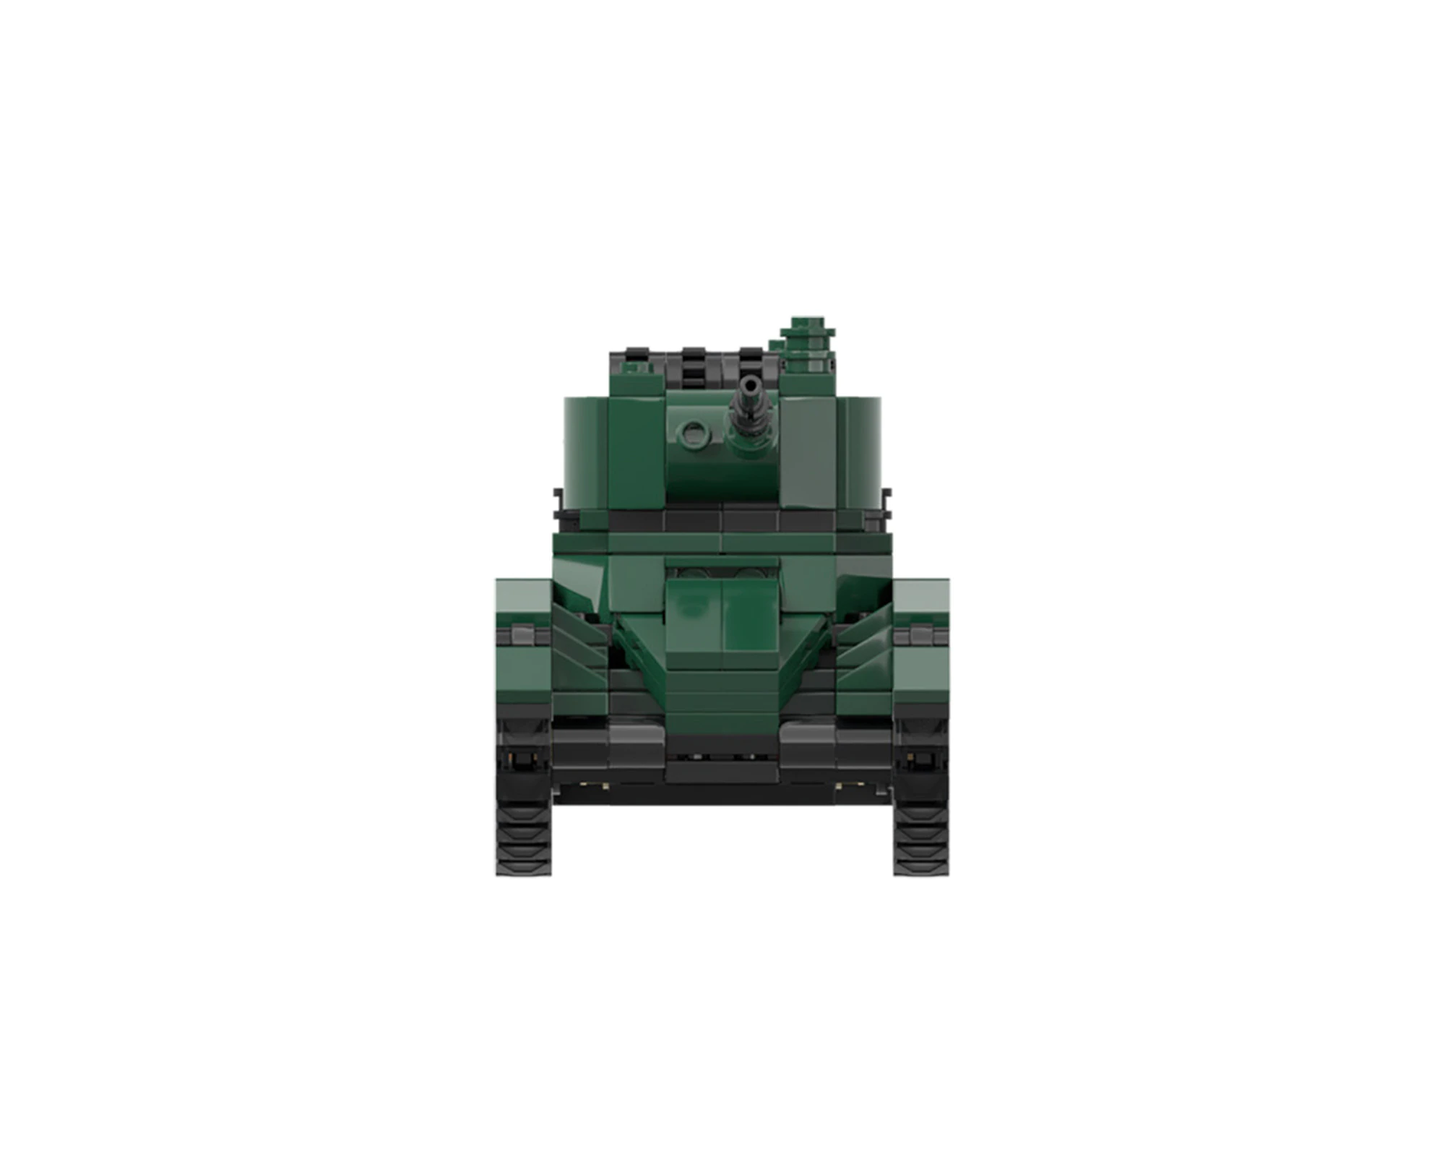 BT-5 - Cavalry Tank - MOMCOM inc.